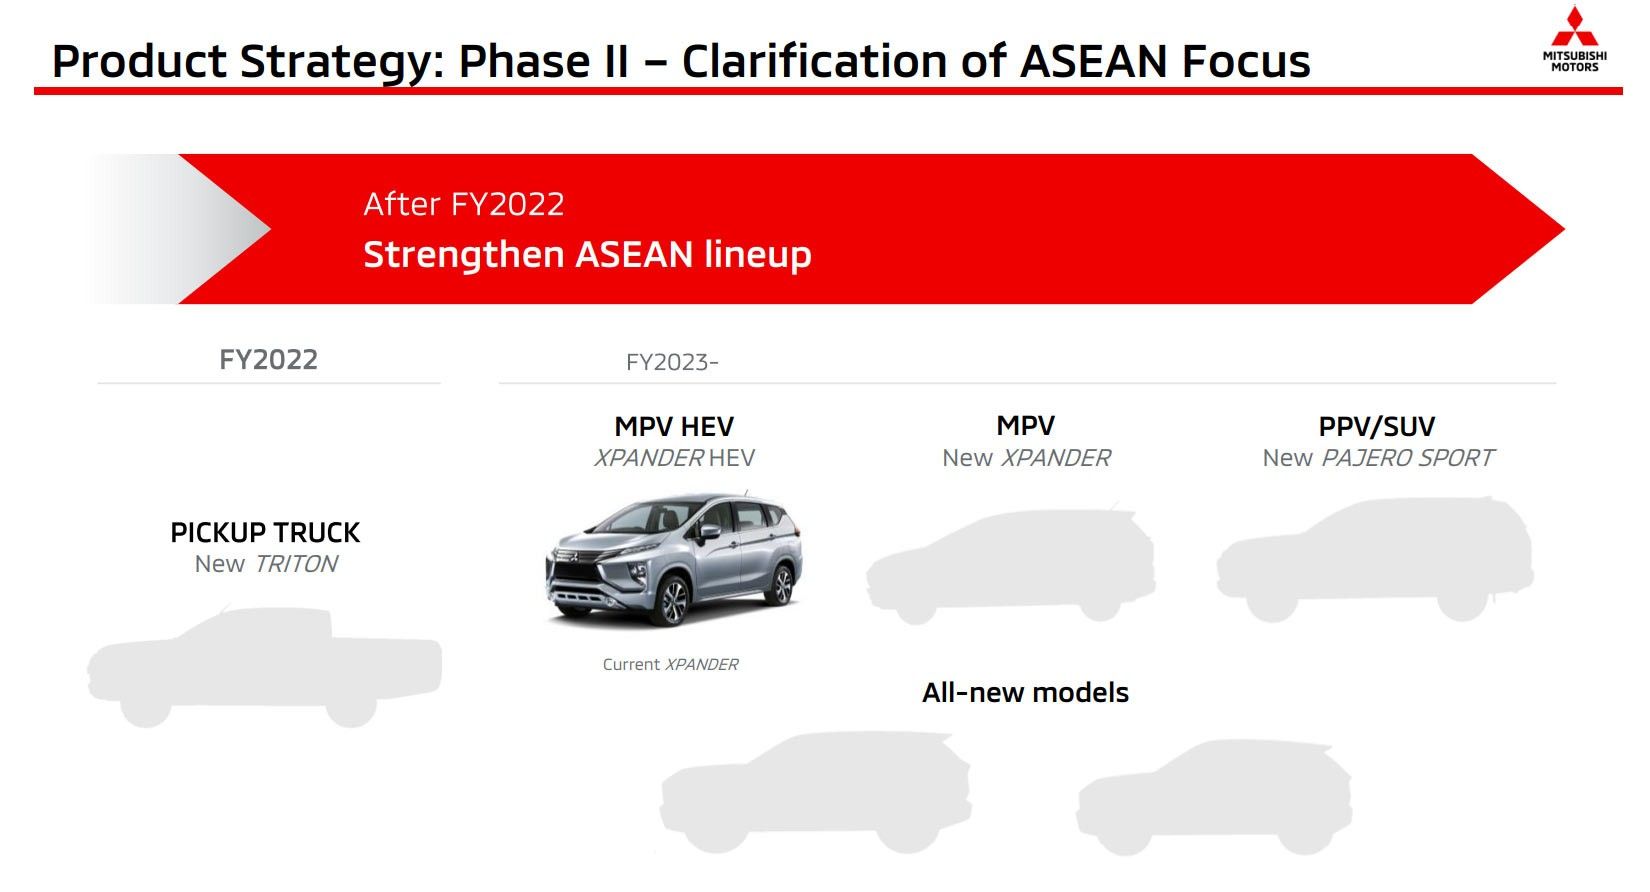 Rencana Mitsubishi untuk kawasan ASEAN